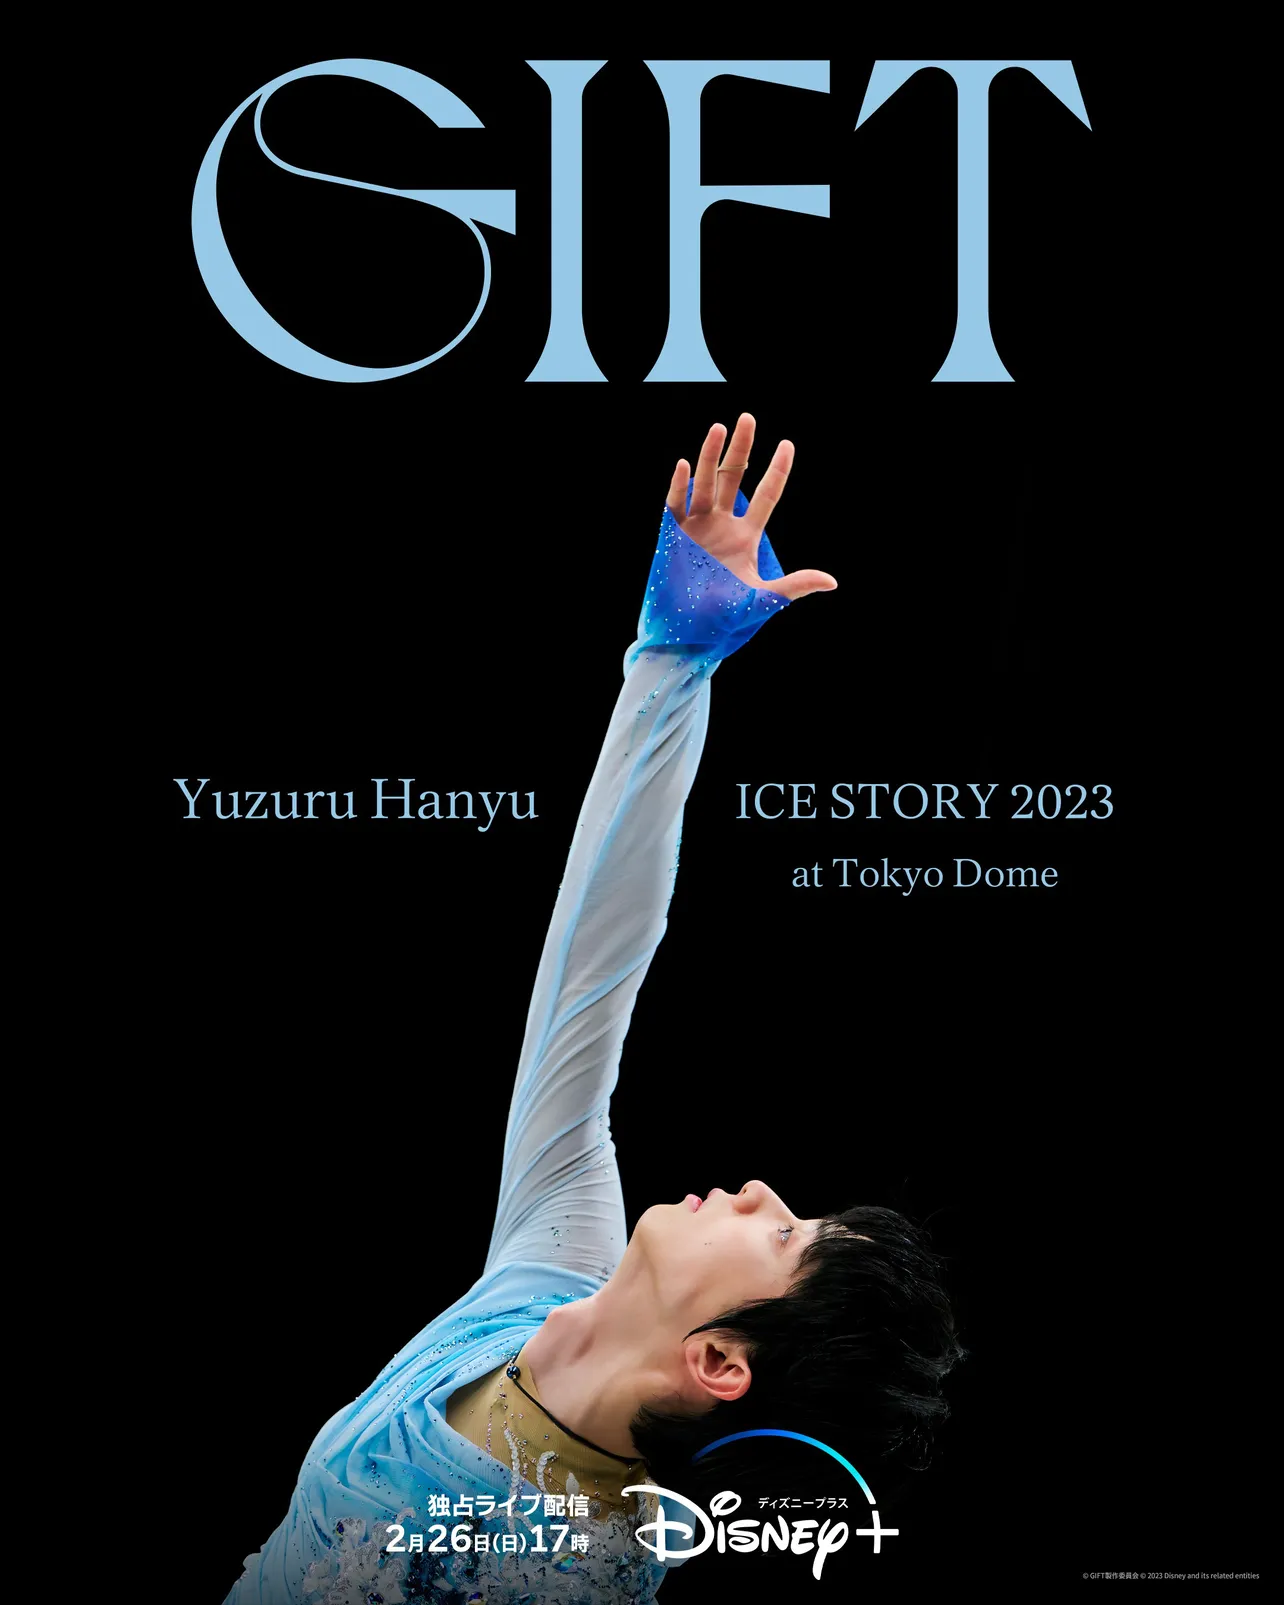 「Yuzuru Hanyu ICE STORY 2023 “GIFT” at Tokyo Dome」は2月26日(日)17:00よりディズニープラスで独占ライブ配信